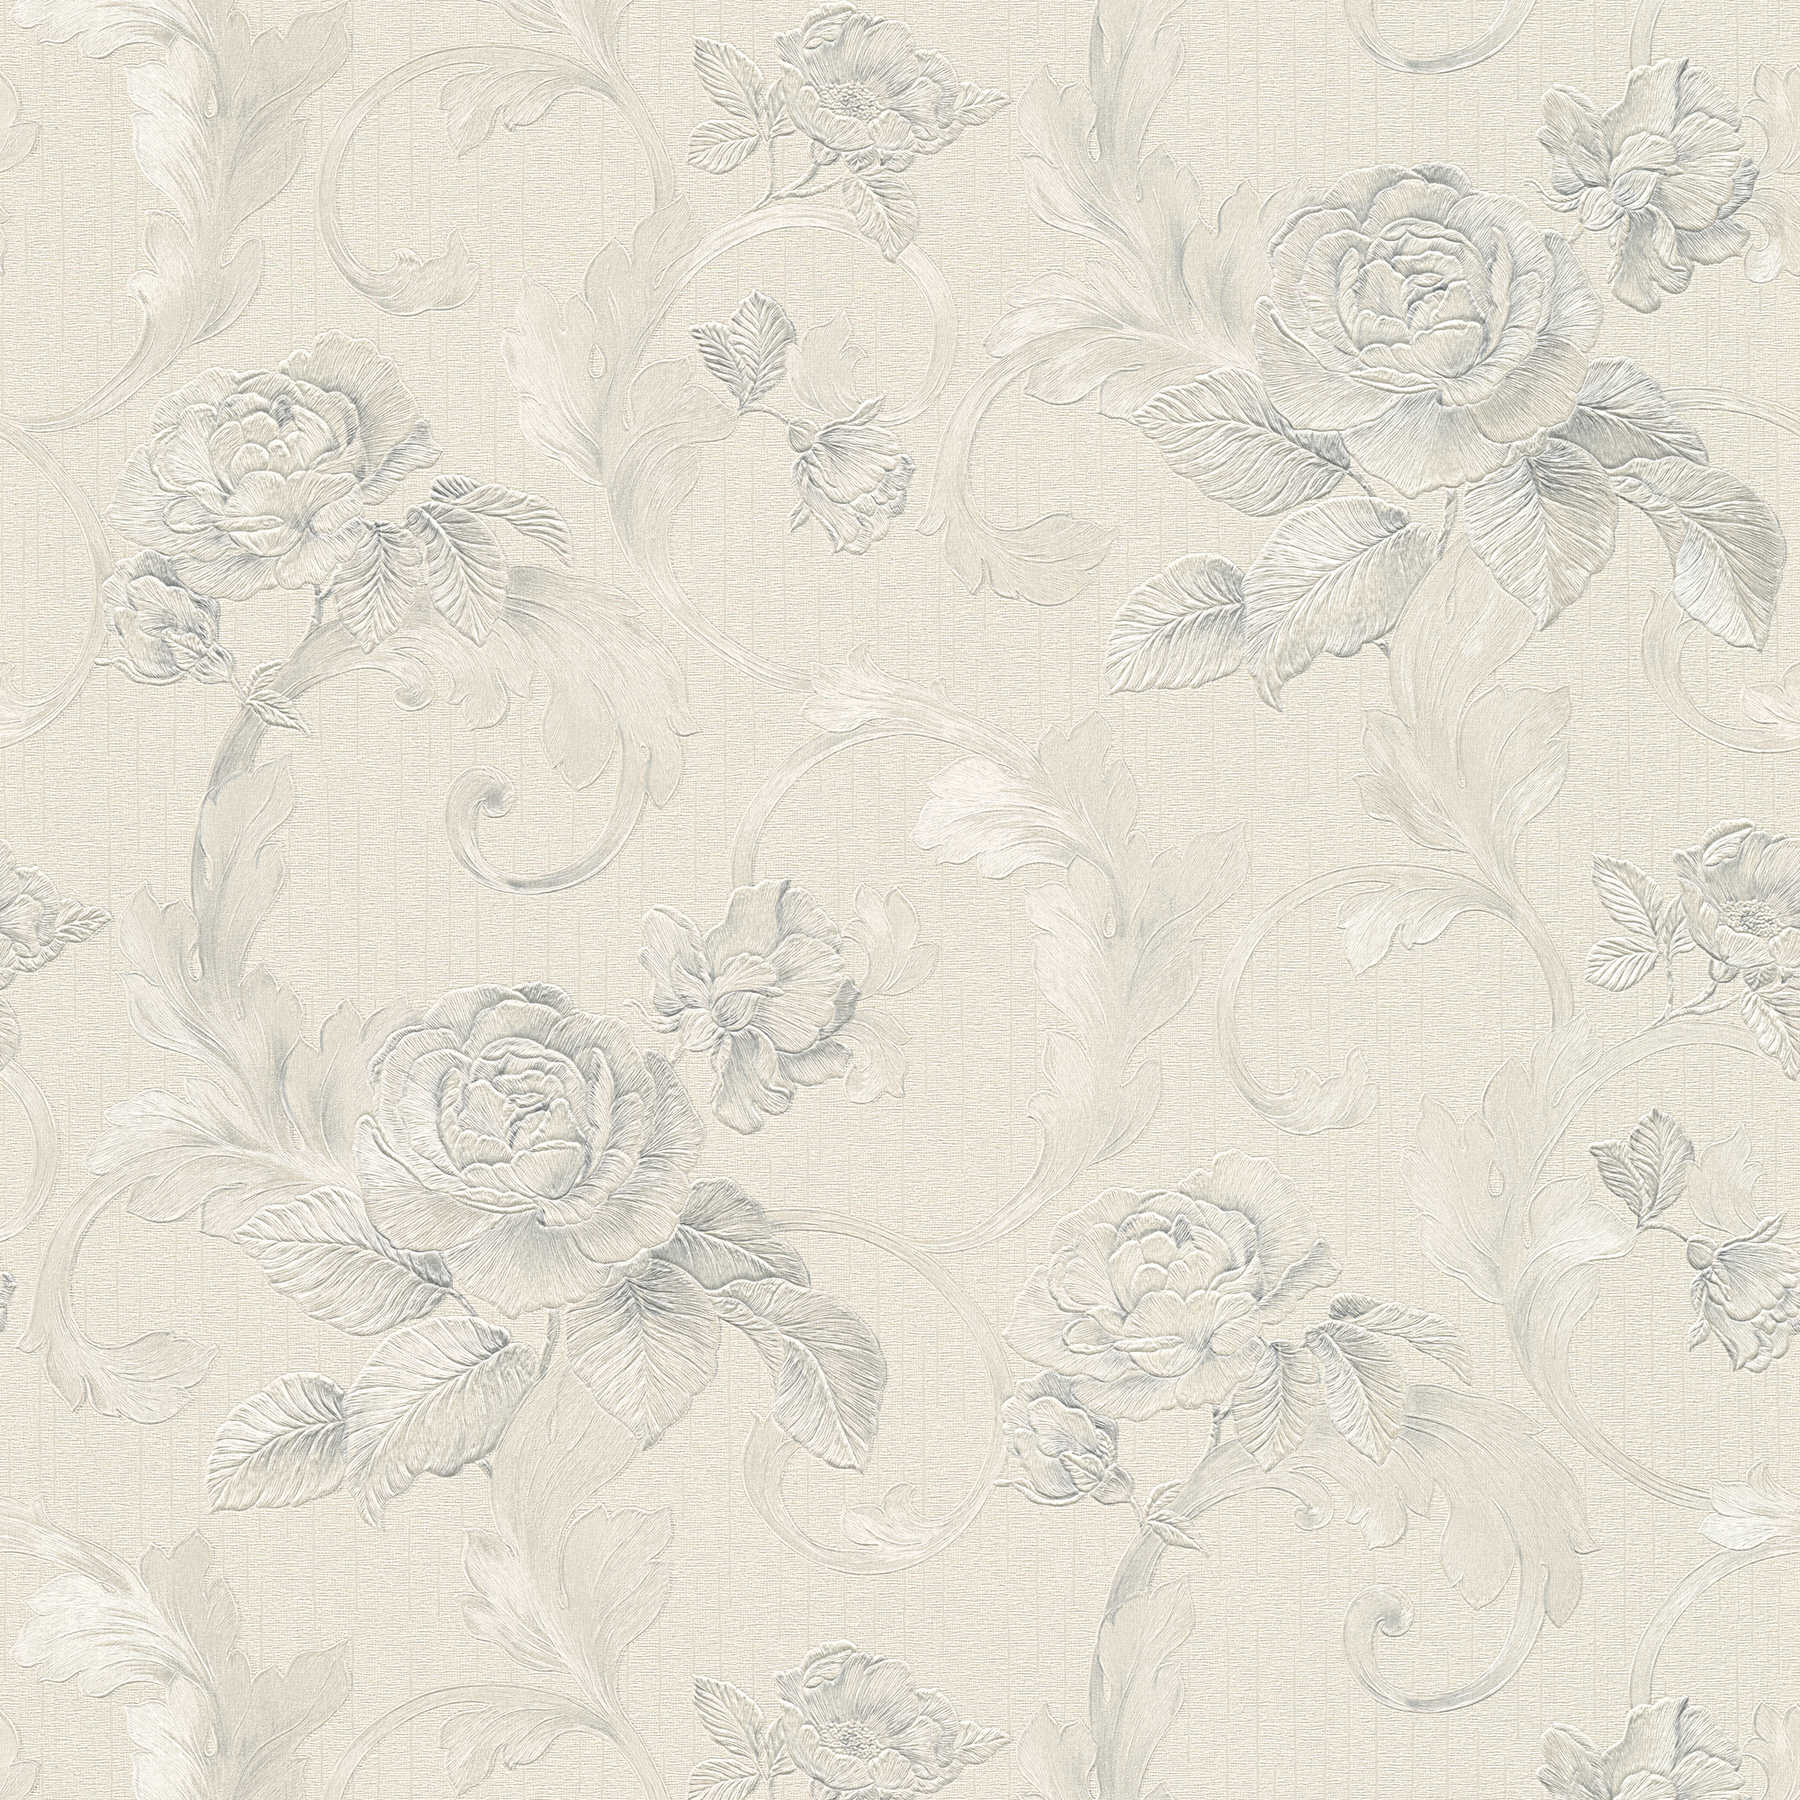 Floral wallpaper elegant roses with metallic effect - grey
